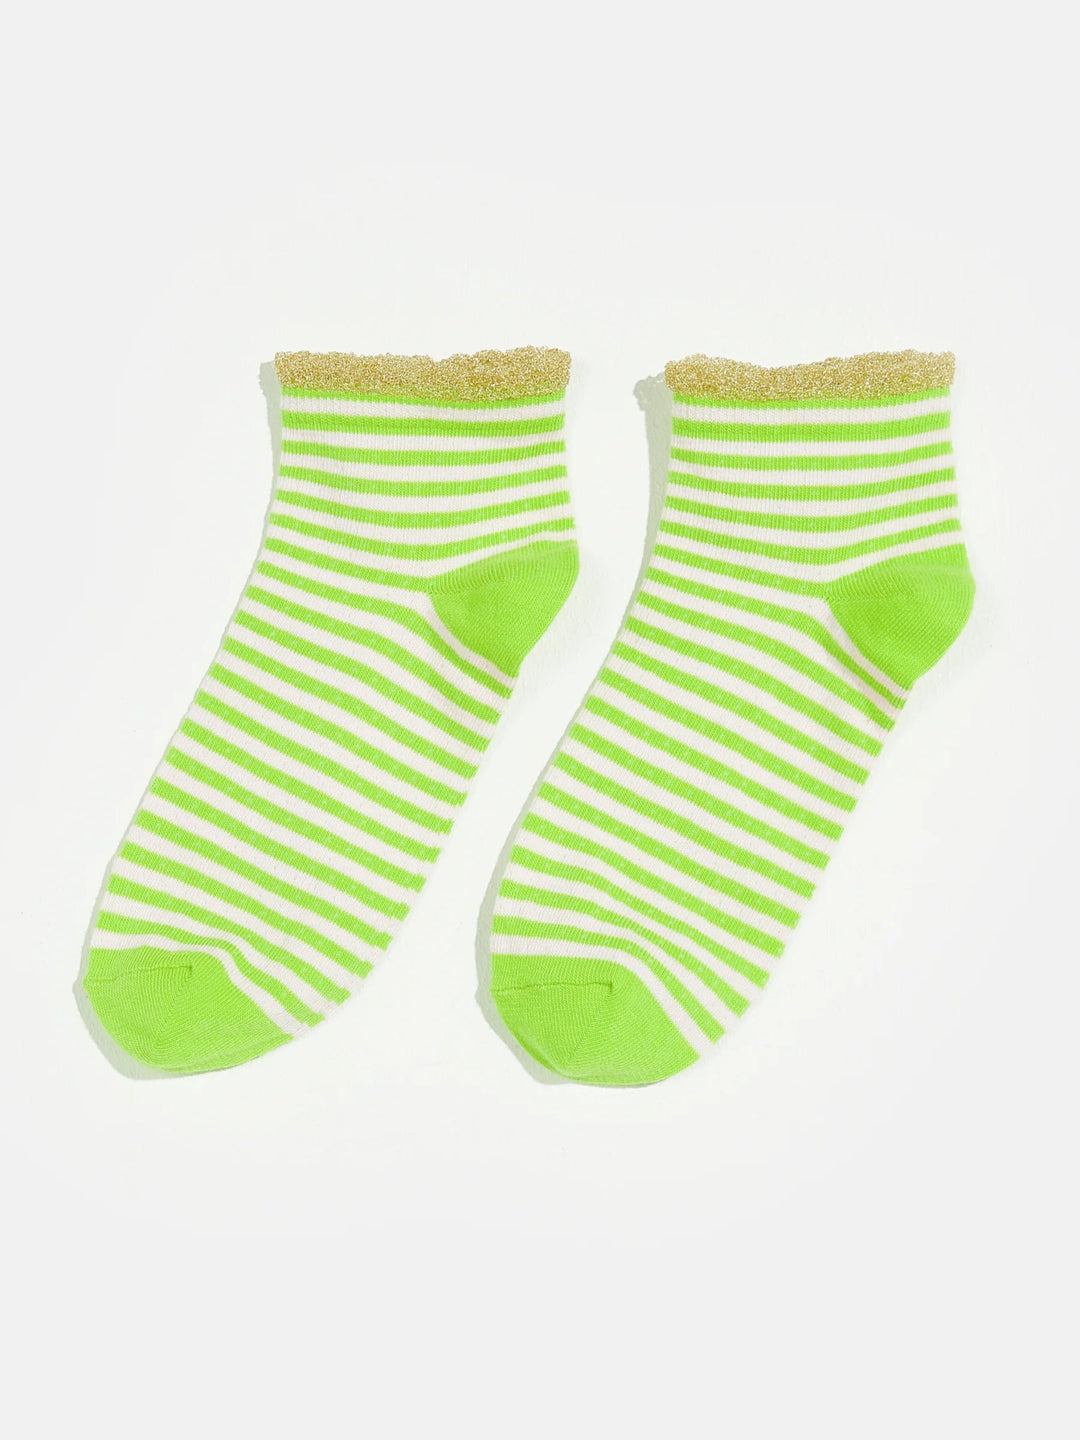 Bolze Socks - Stripe B - Posh New York